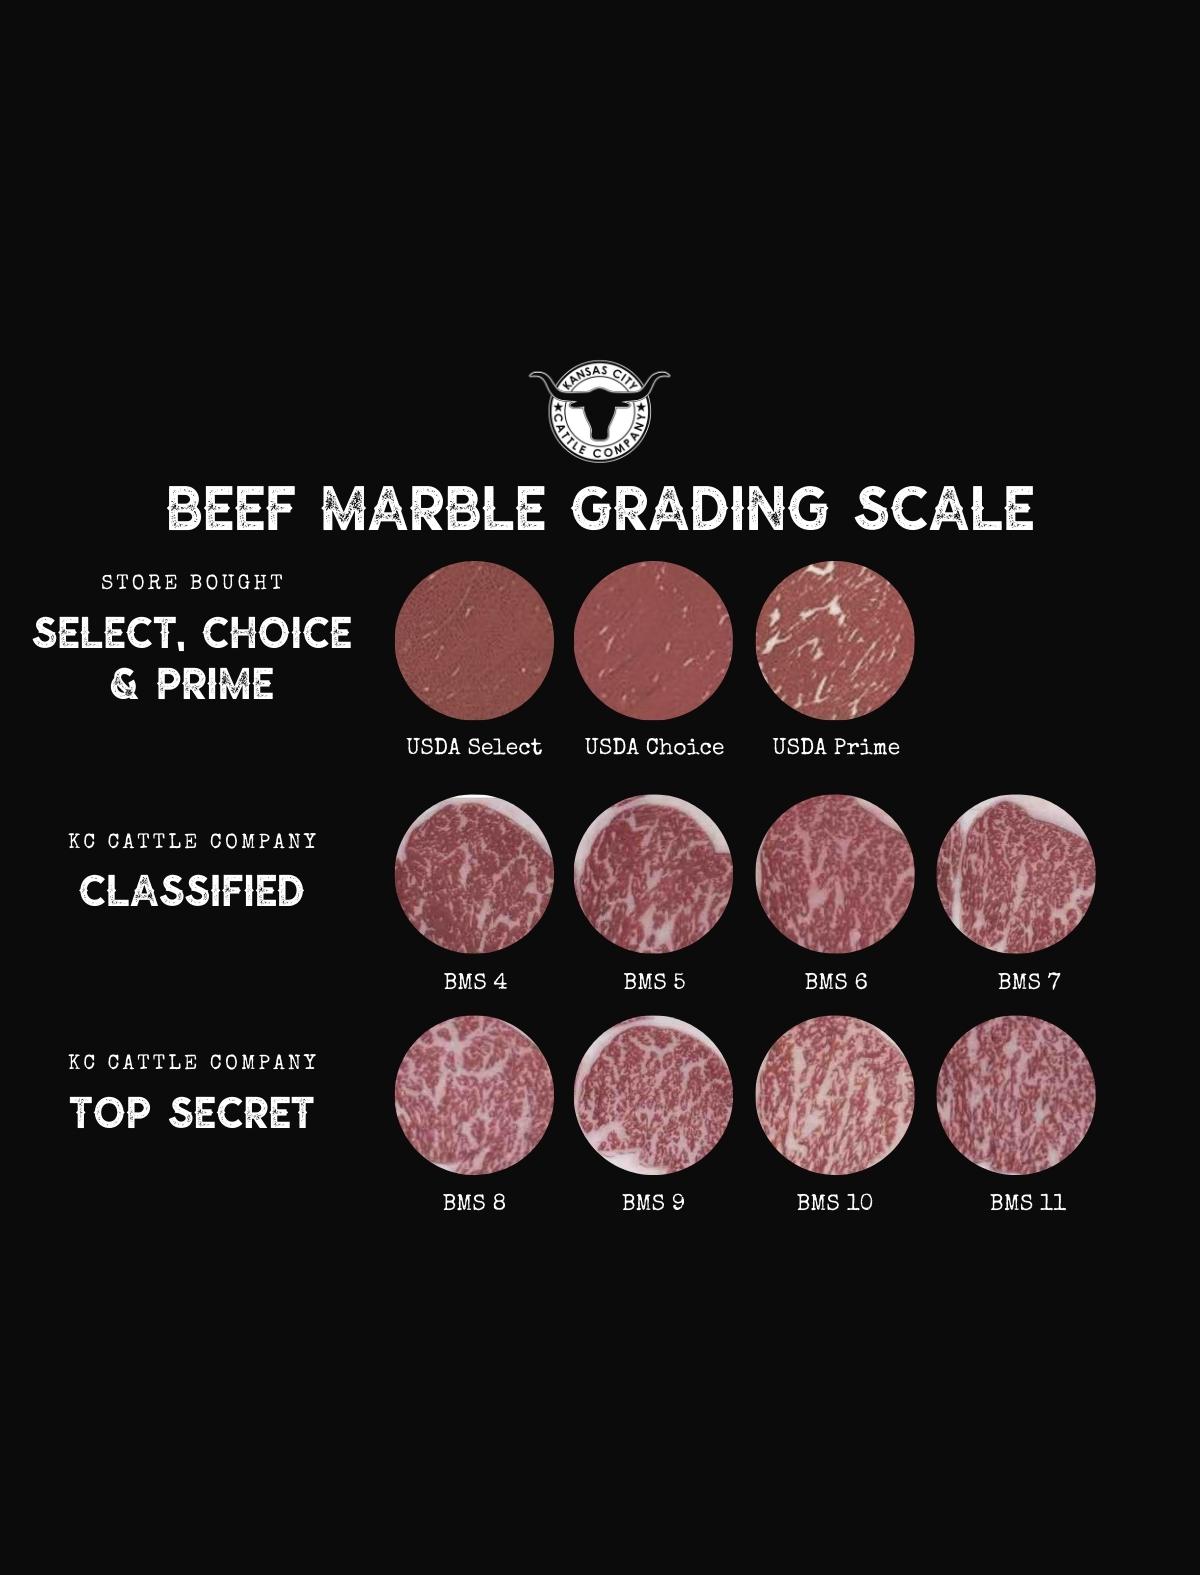 Wagyu marbling grading scale